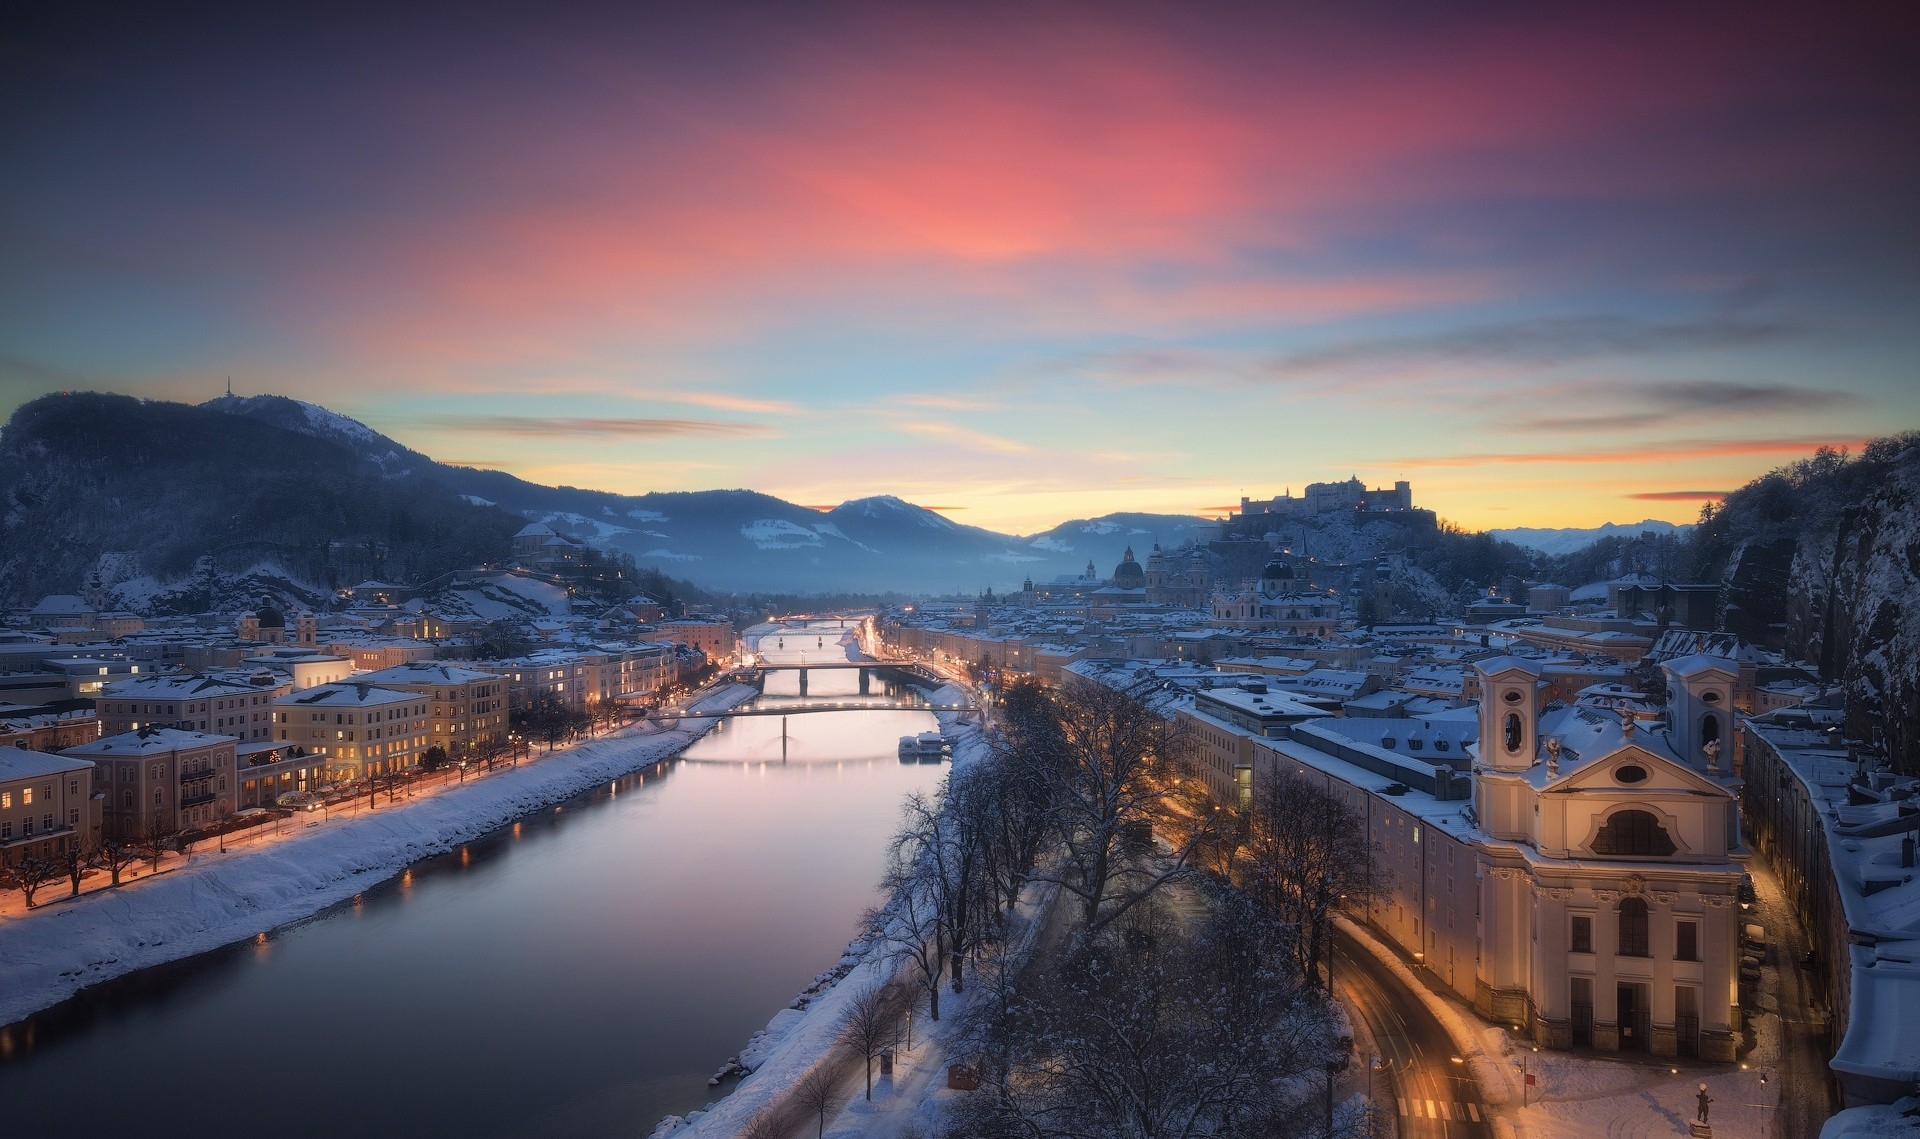 The Night City of Salzburg in Austria